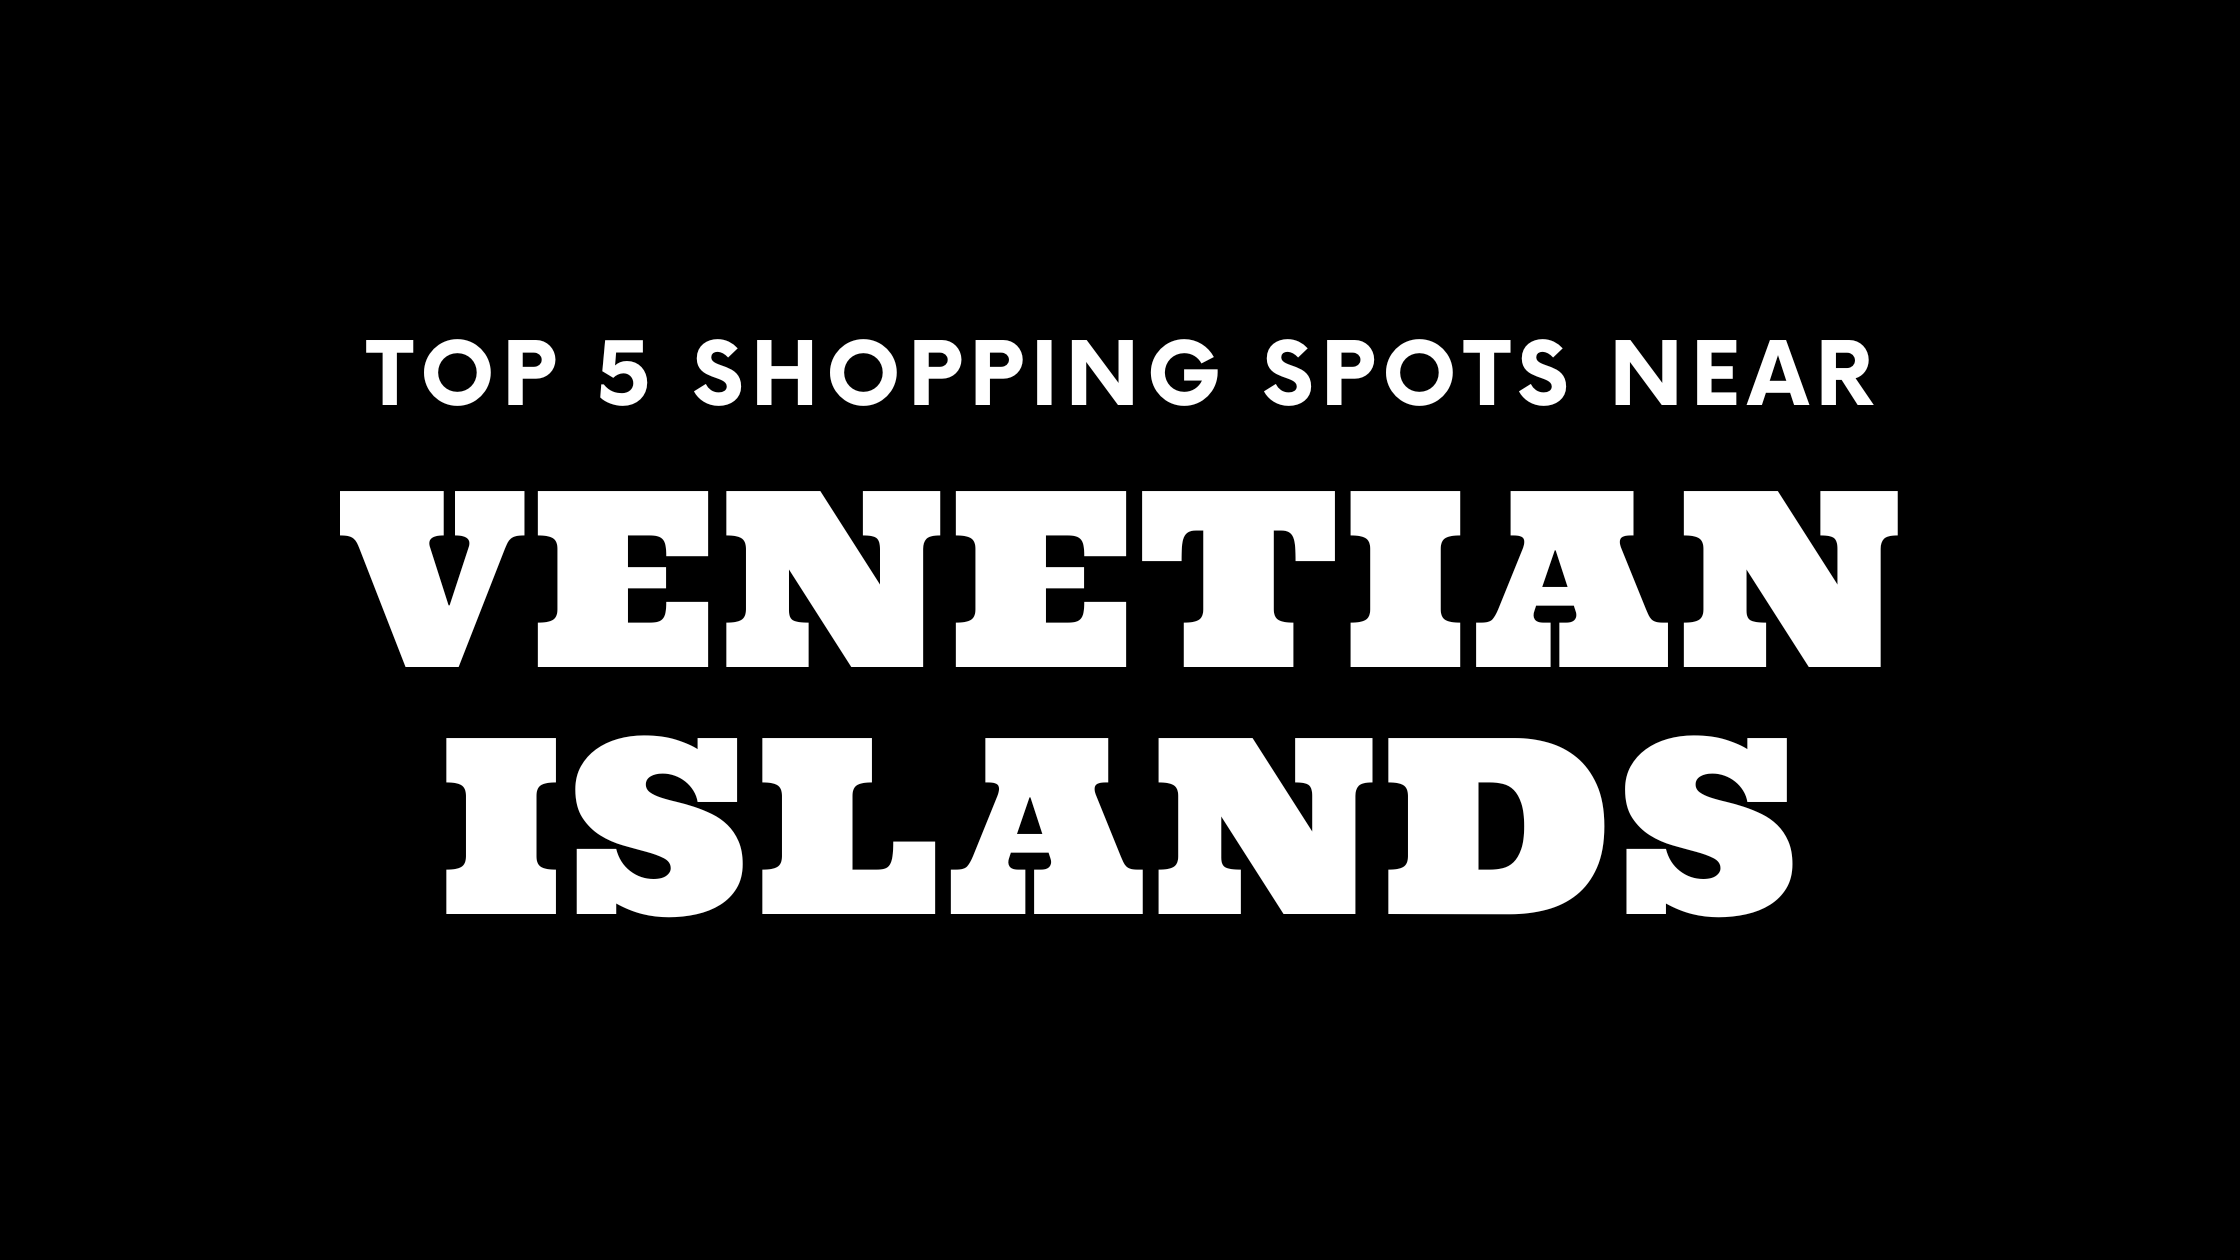 Top 5 Shopping Spots Near Venetian Islands